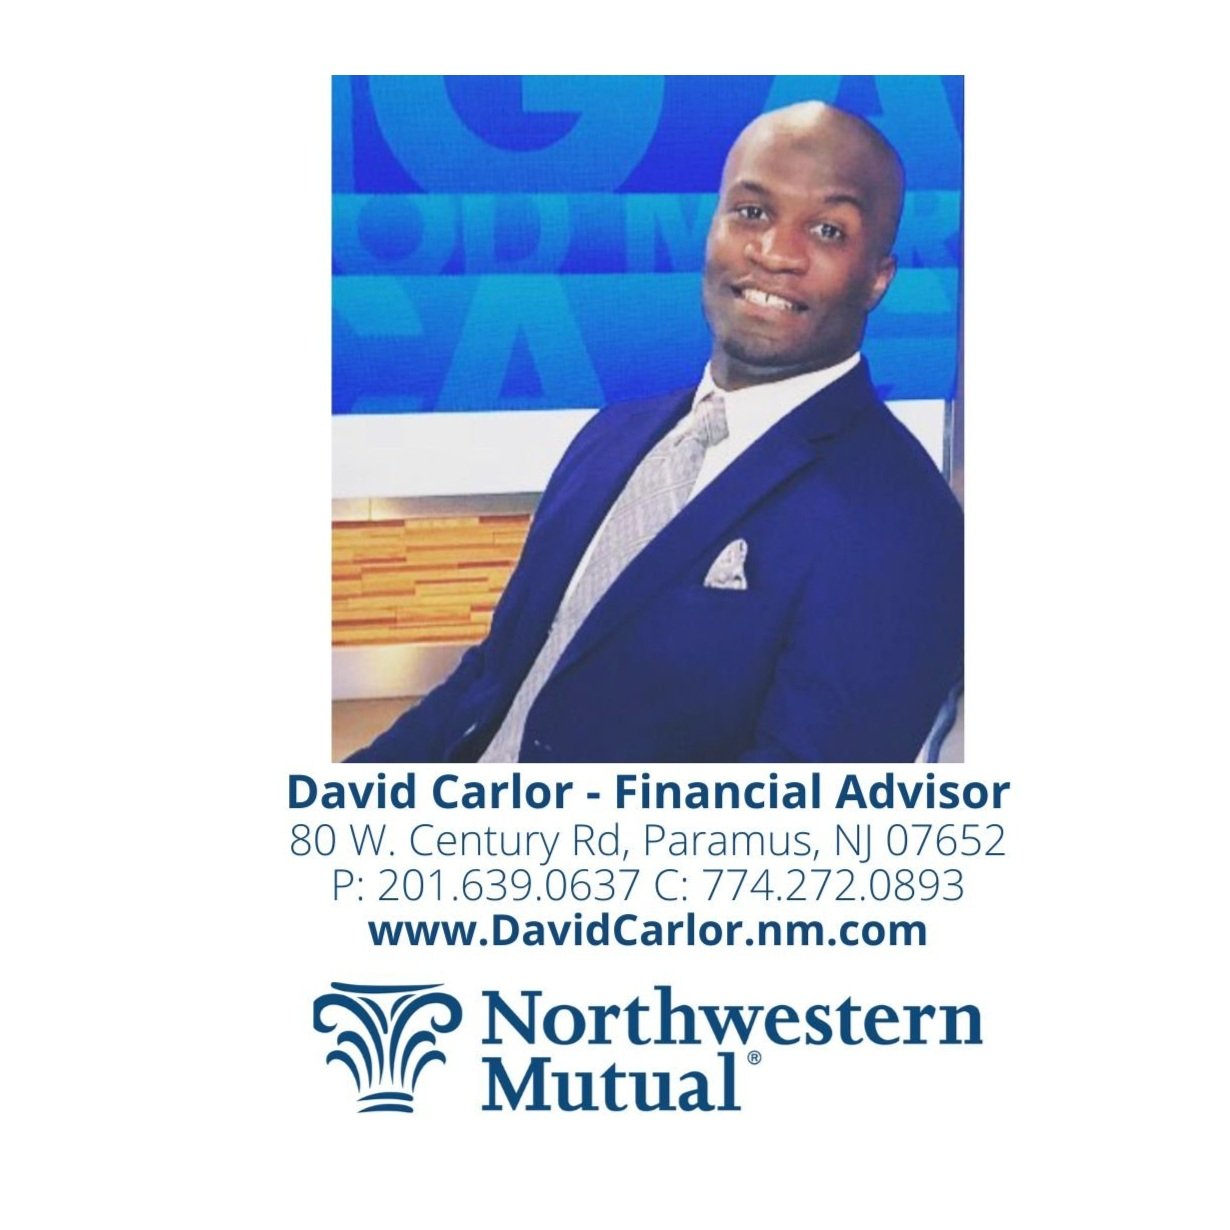 David Carlor Financial Advisor - Northwestern Mutual